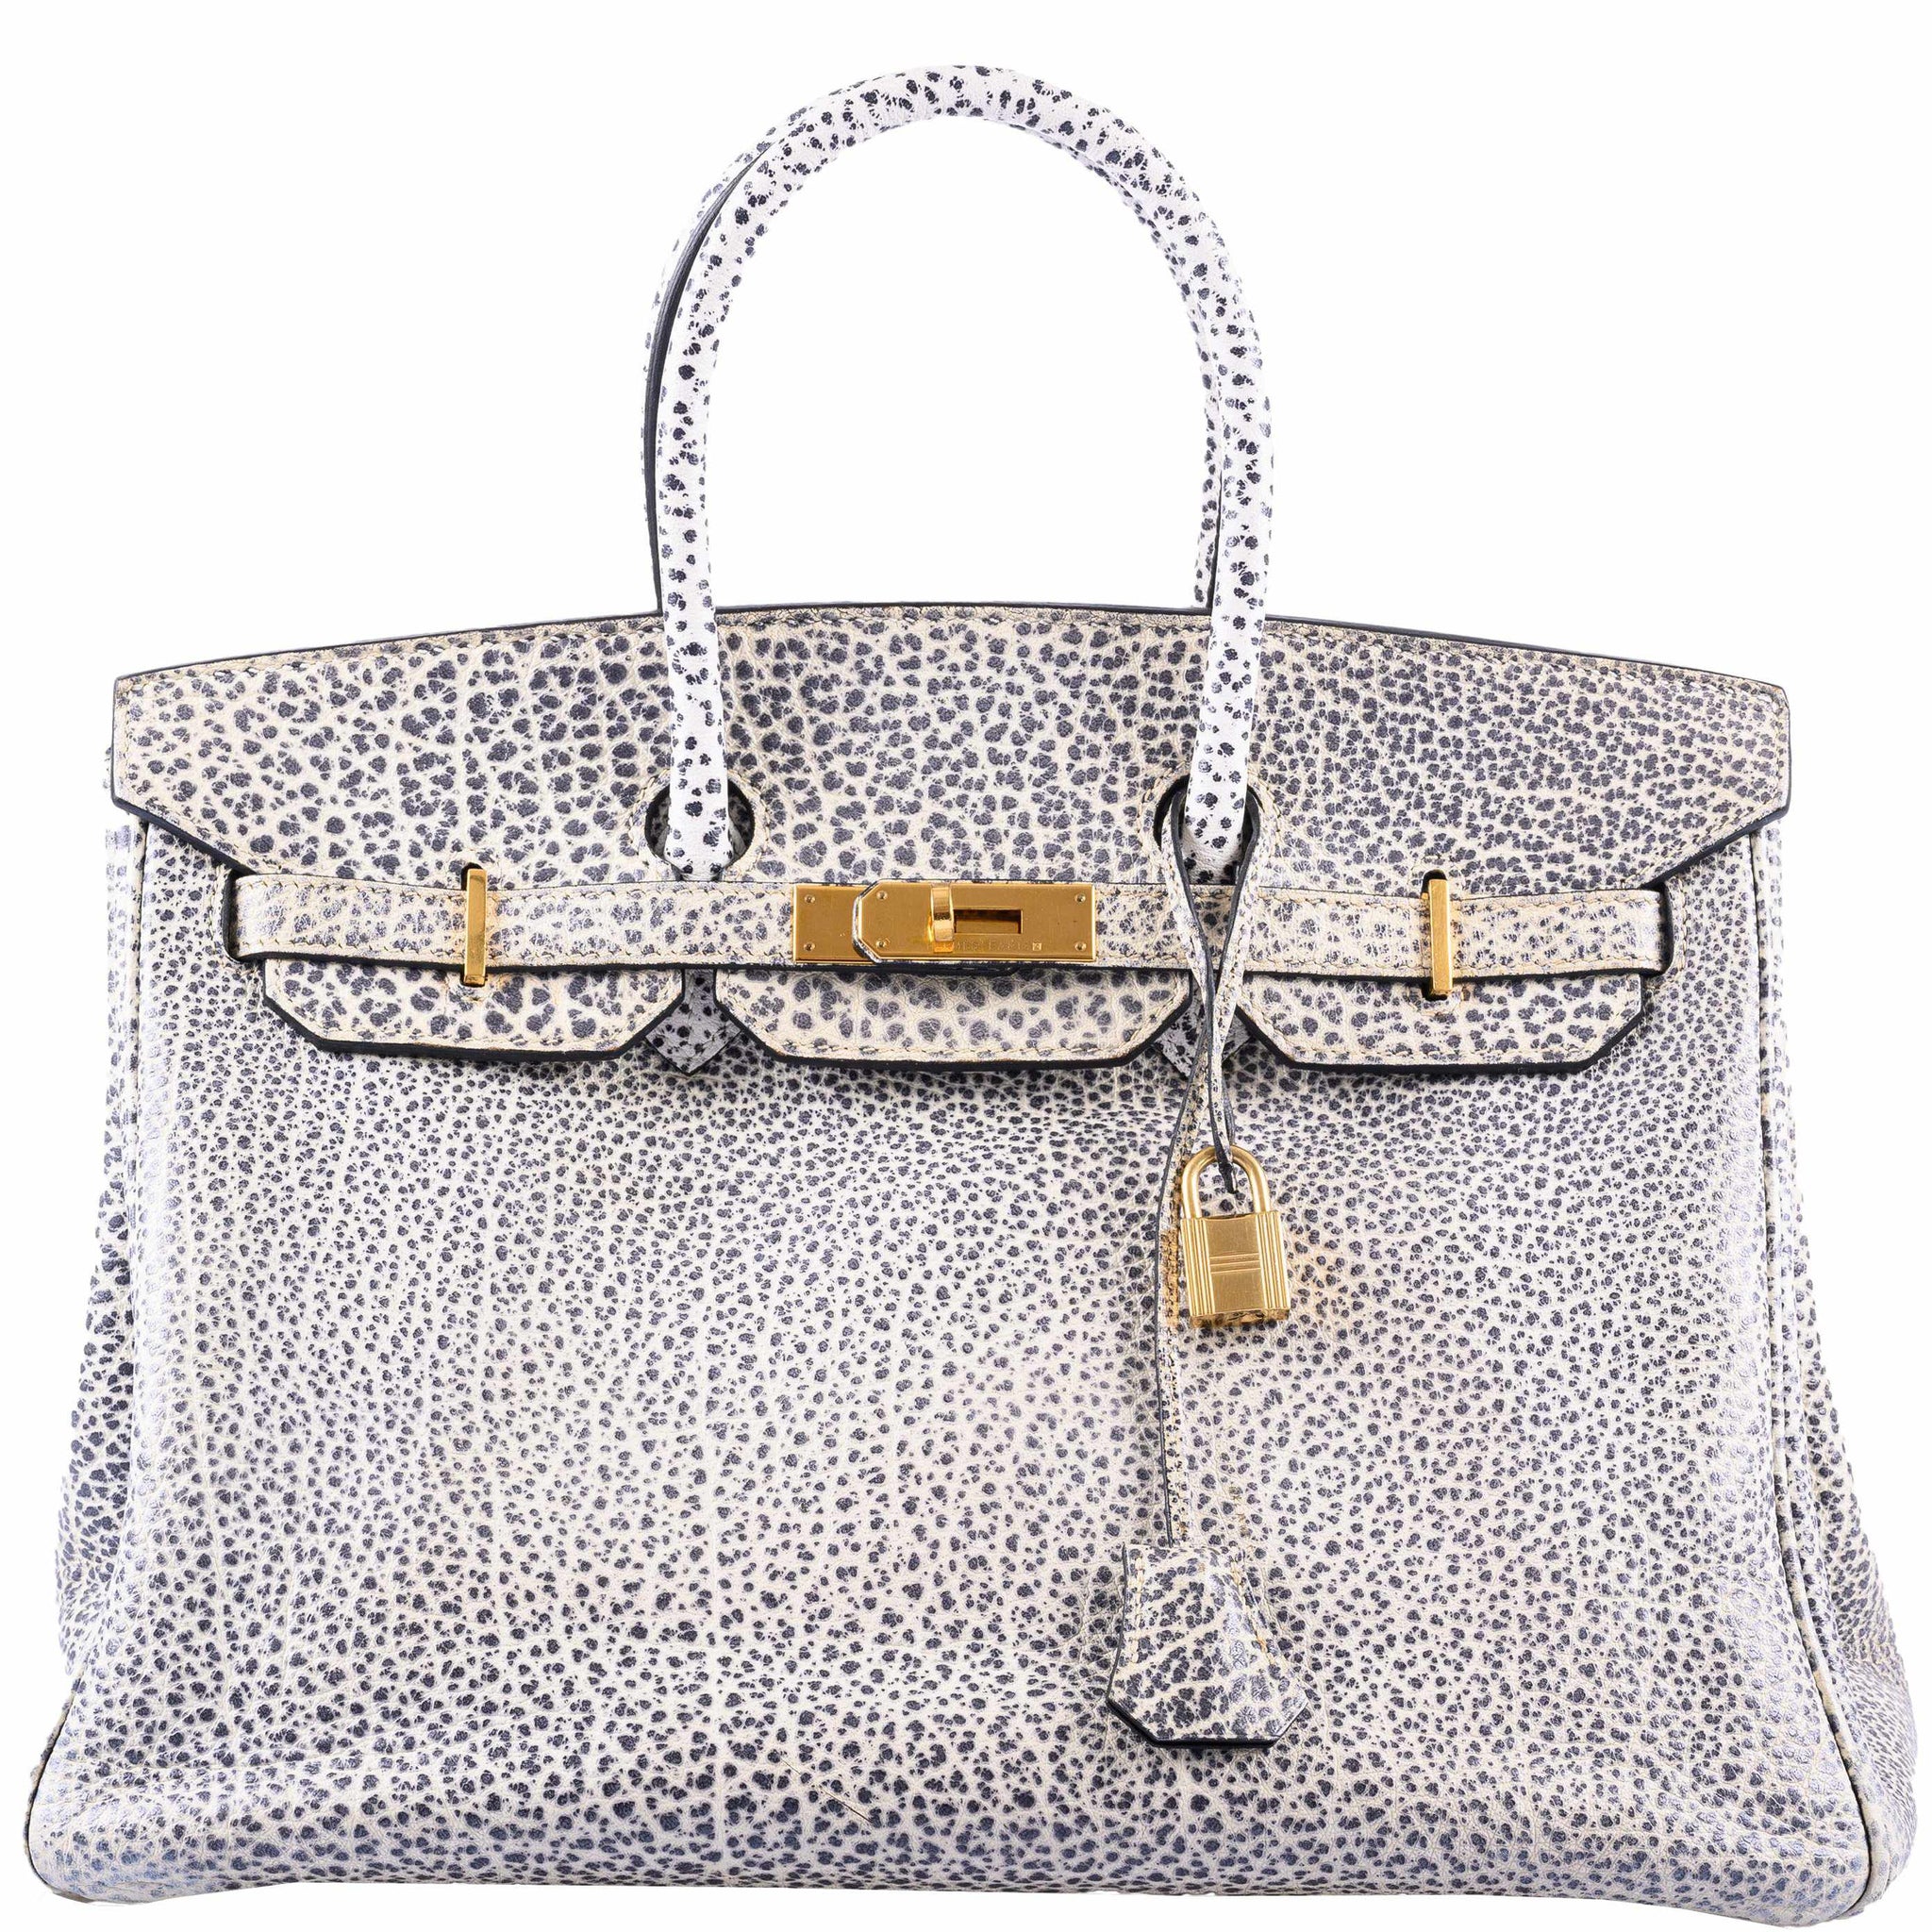 Hermès Authenticated Birkin 35 Leather Handbag